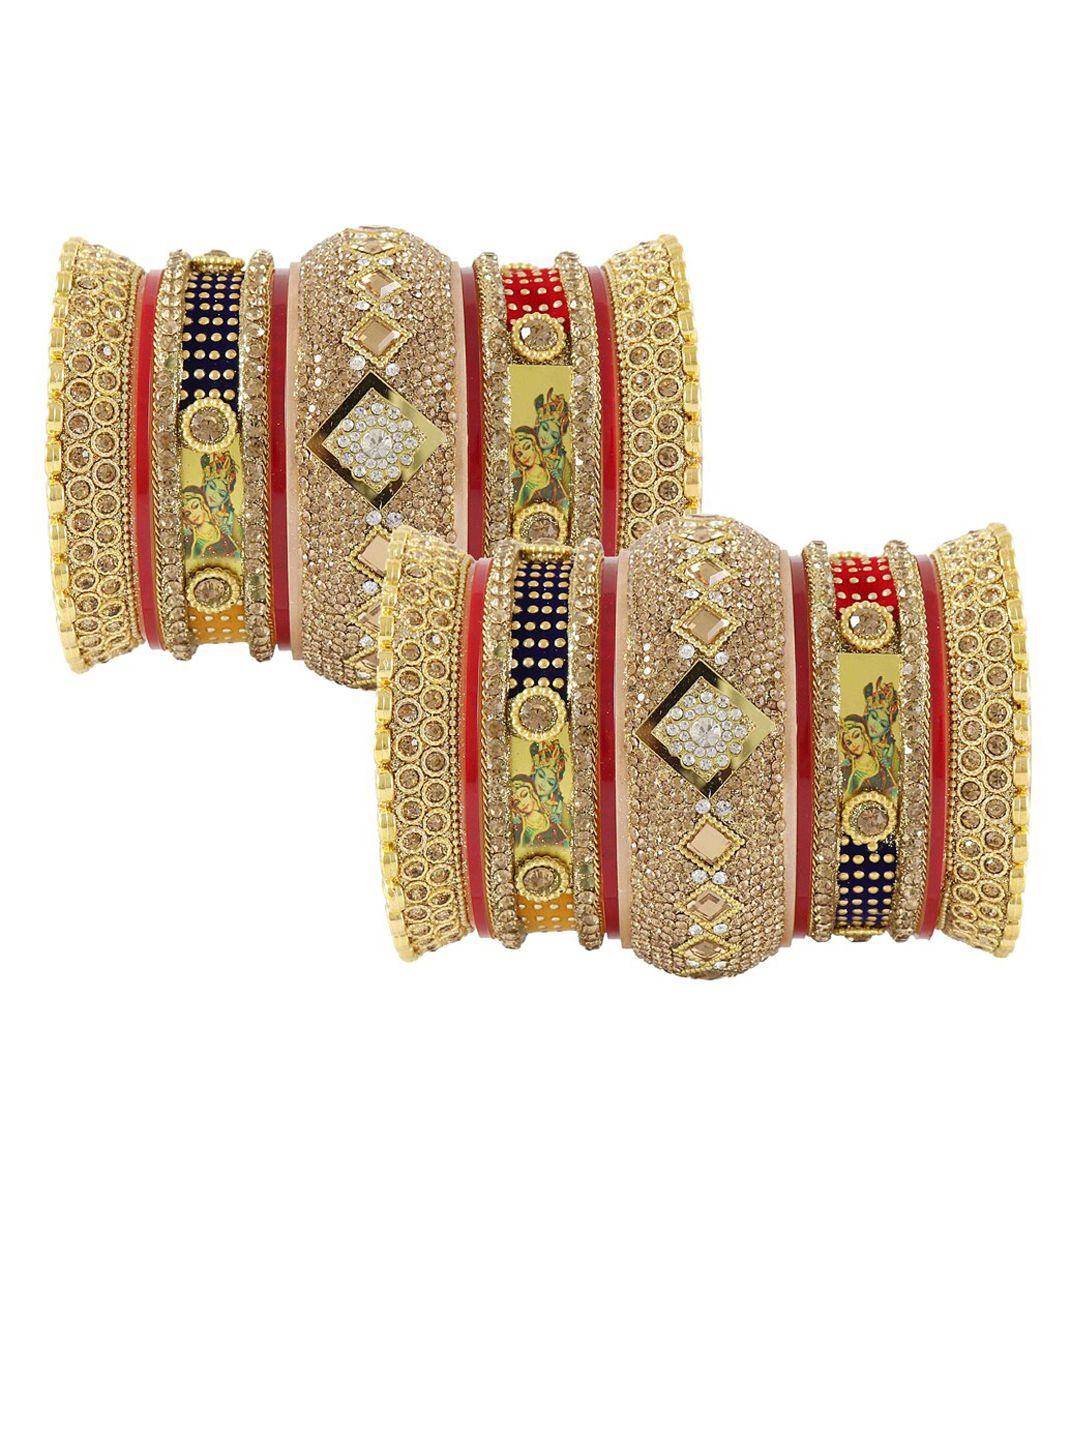 nmii set of 18 zircon gemstone studded radha krishna bangles